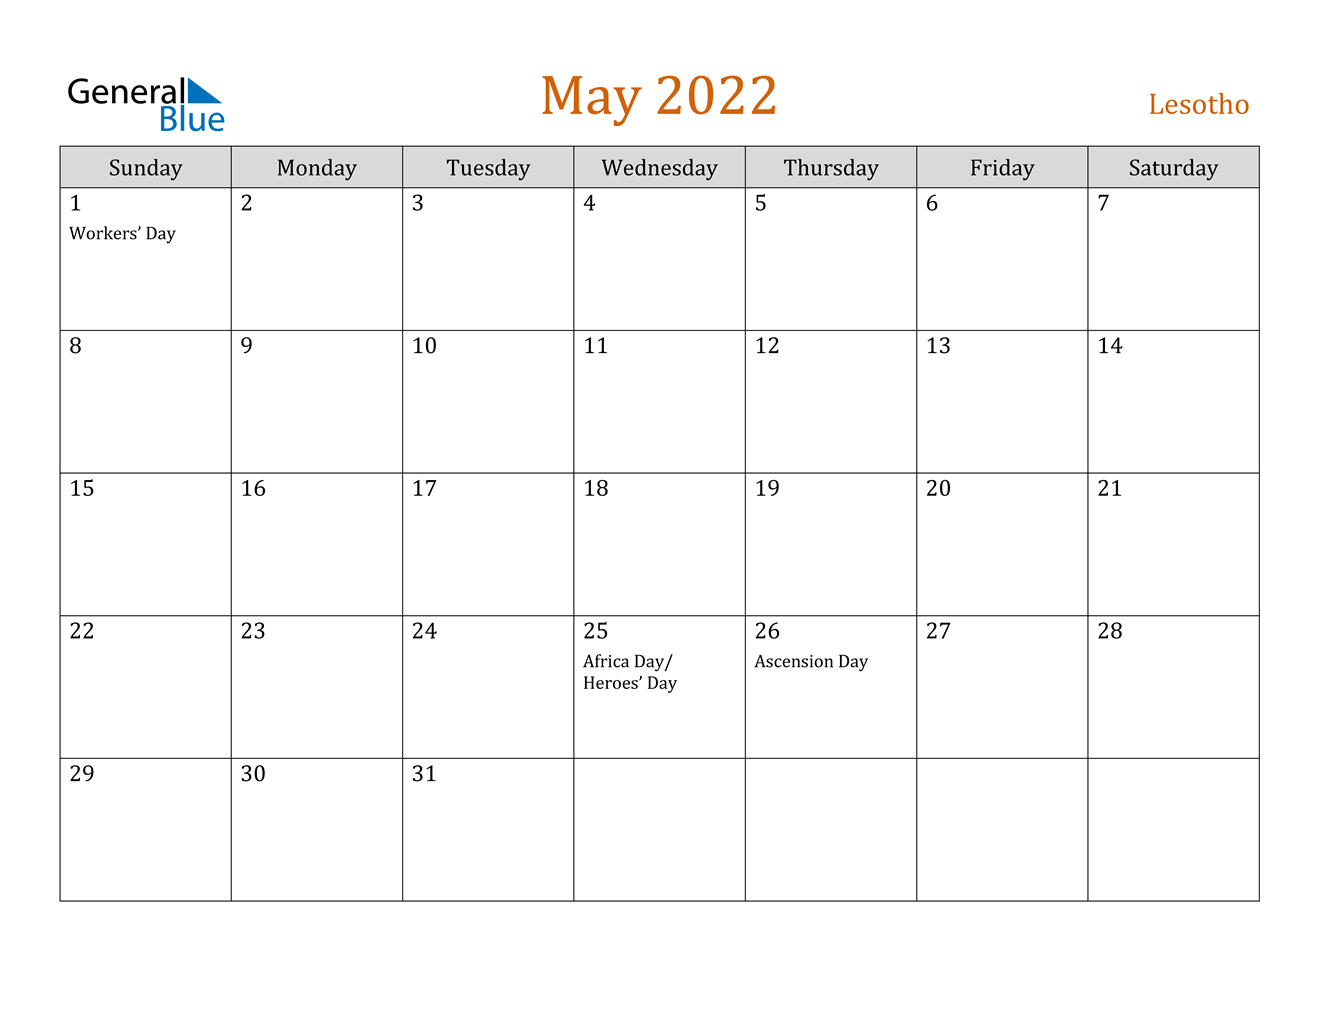 May 2022 Calendar - Lesotho